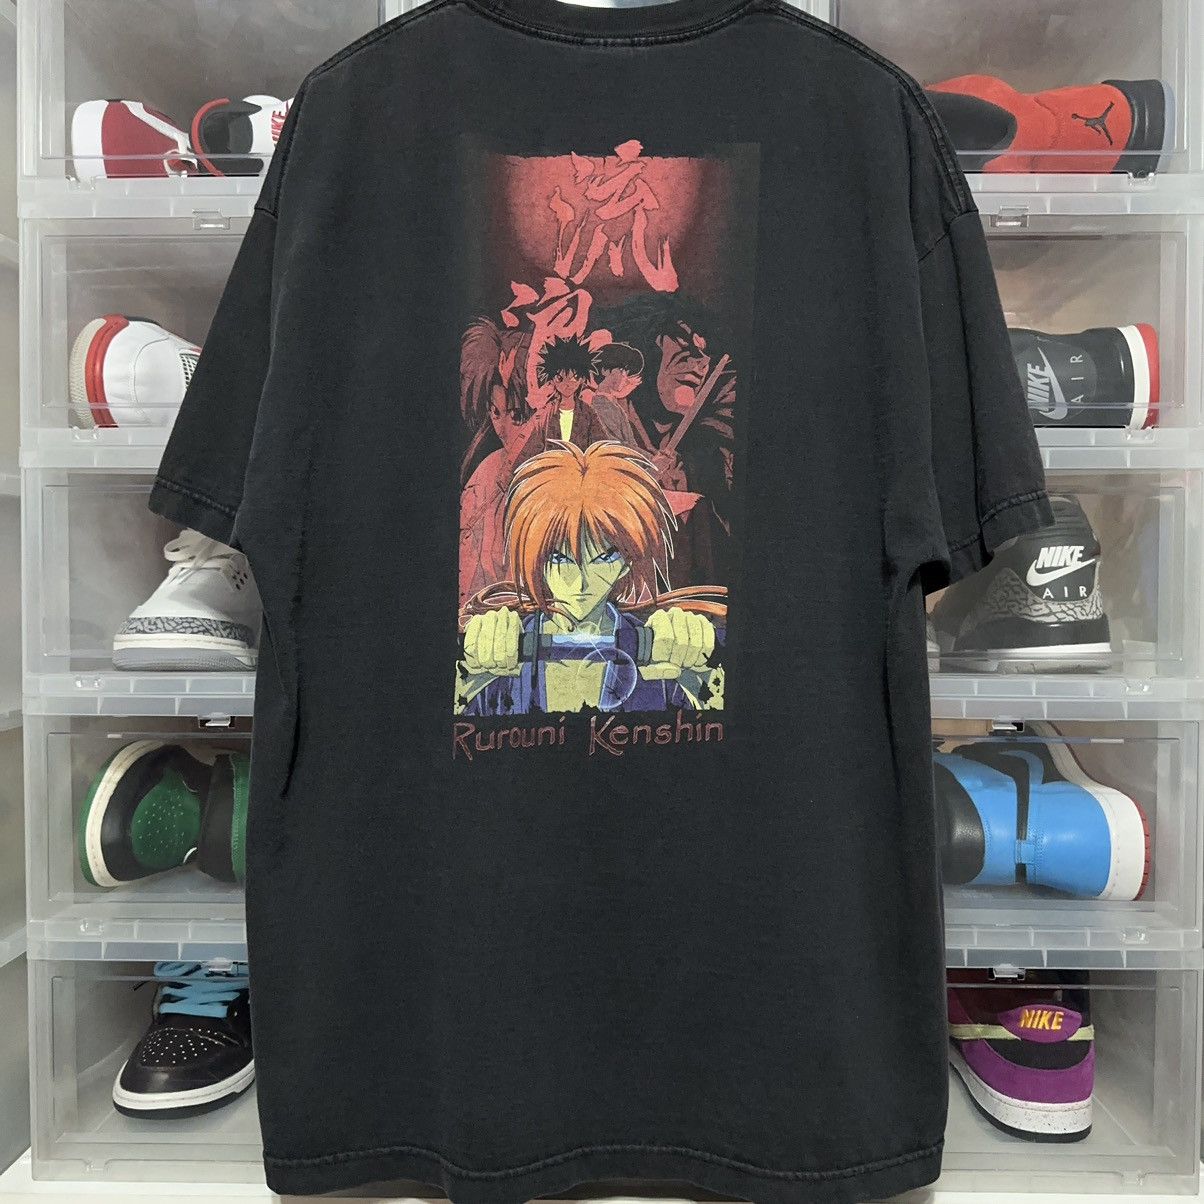 RARE Vintage Rurouni Kenshin Anime Promo T-Shirt XXL - 1